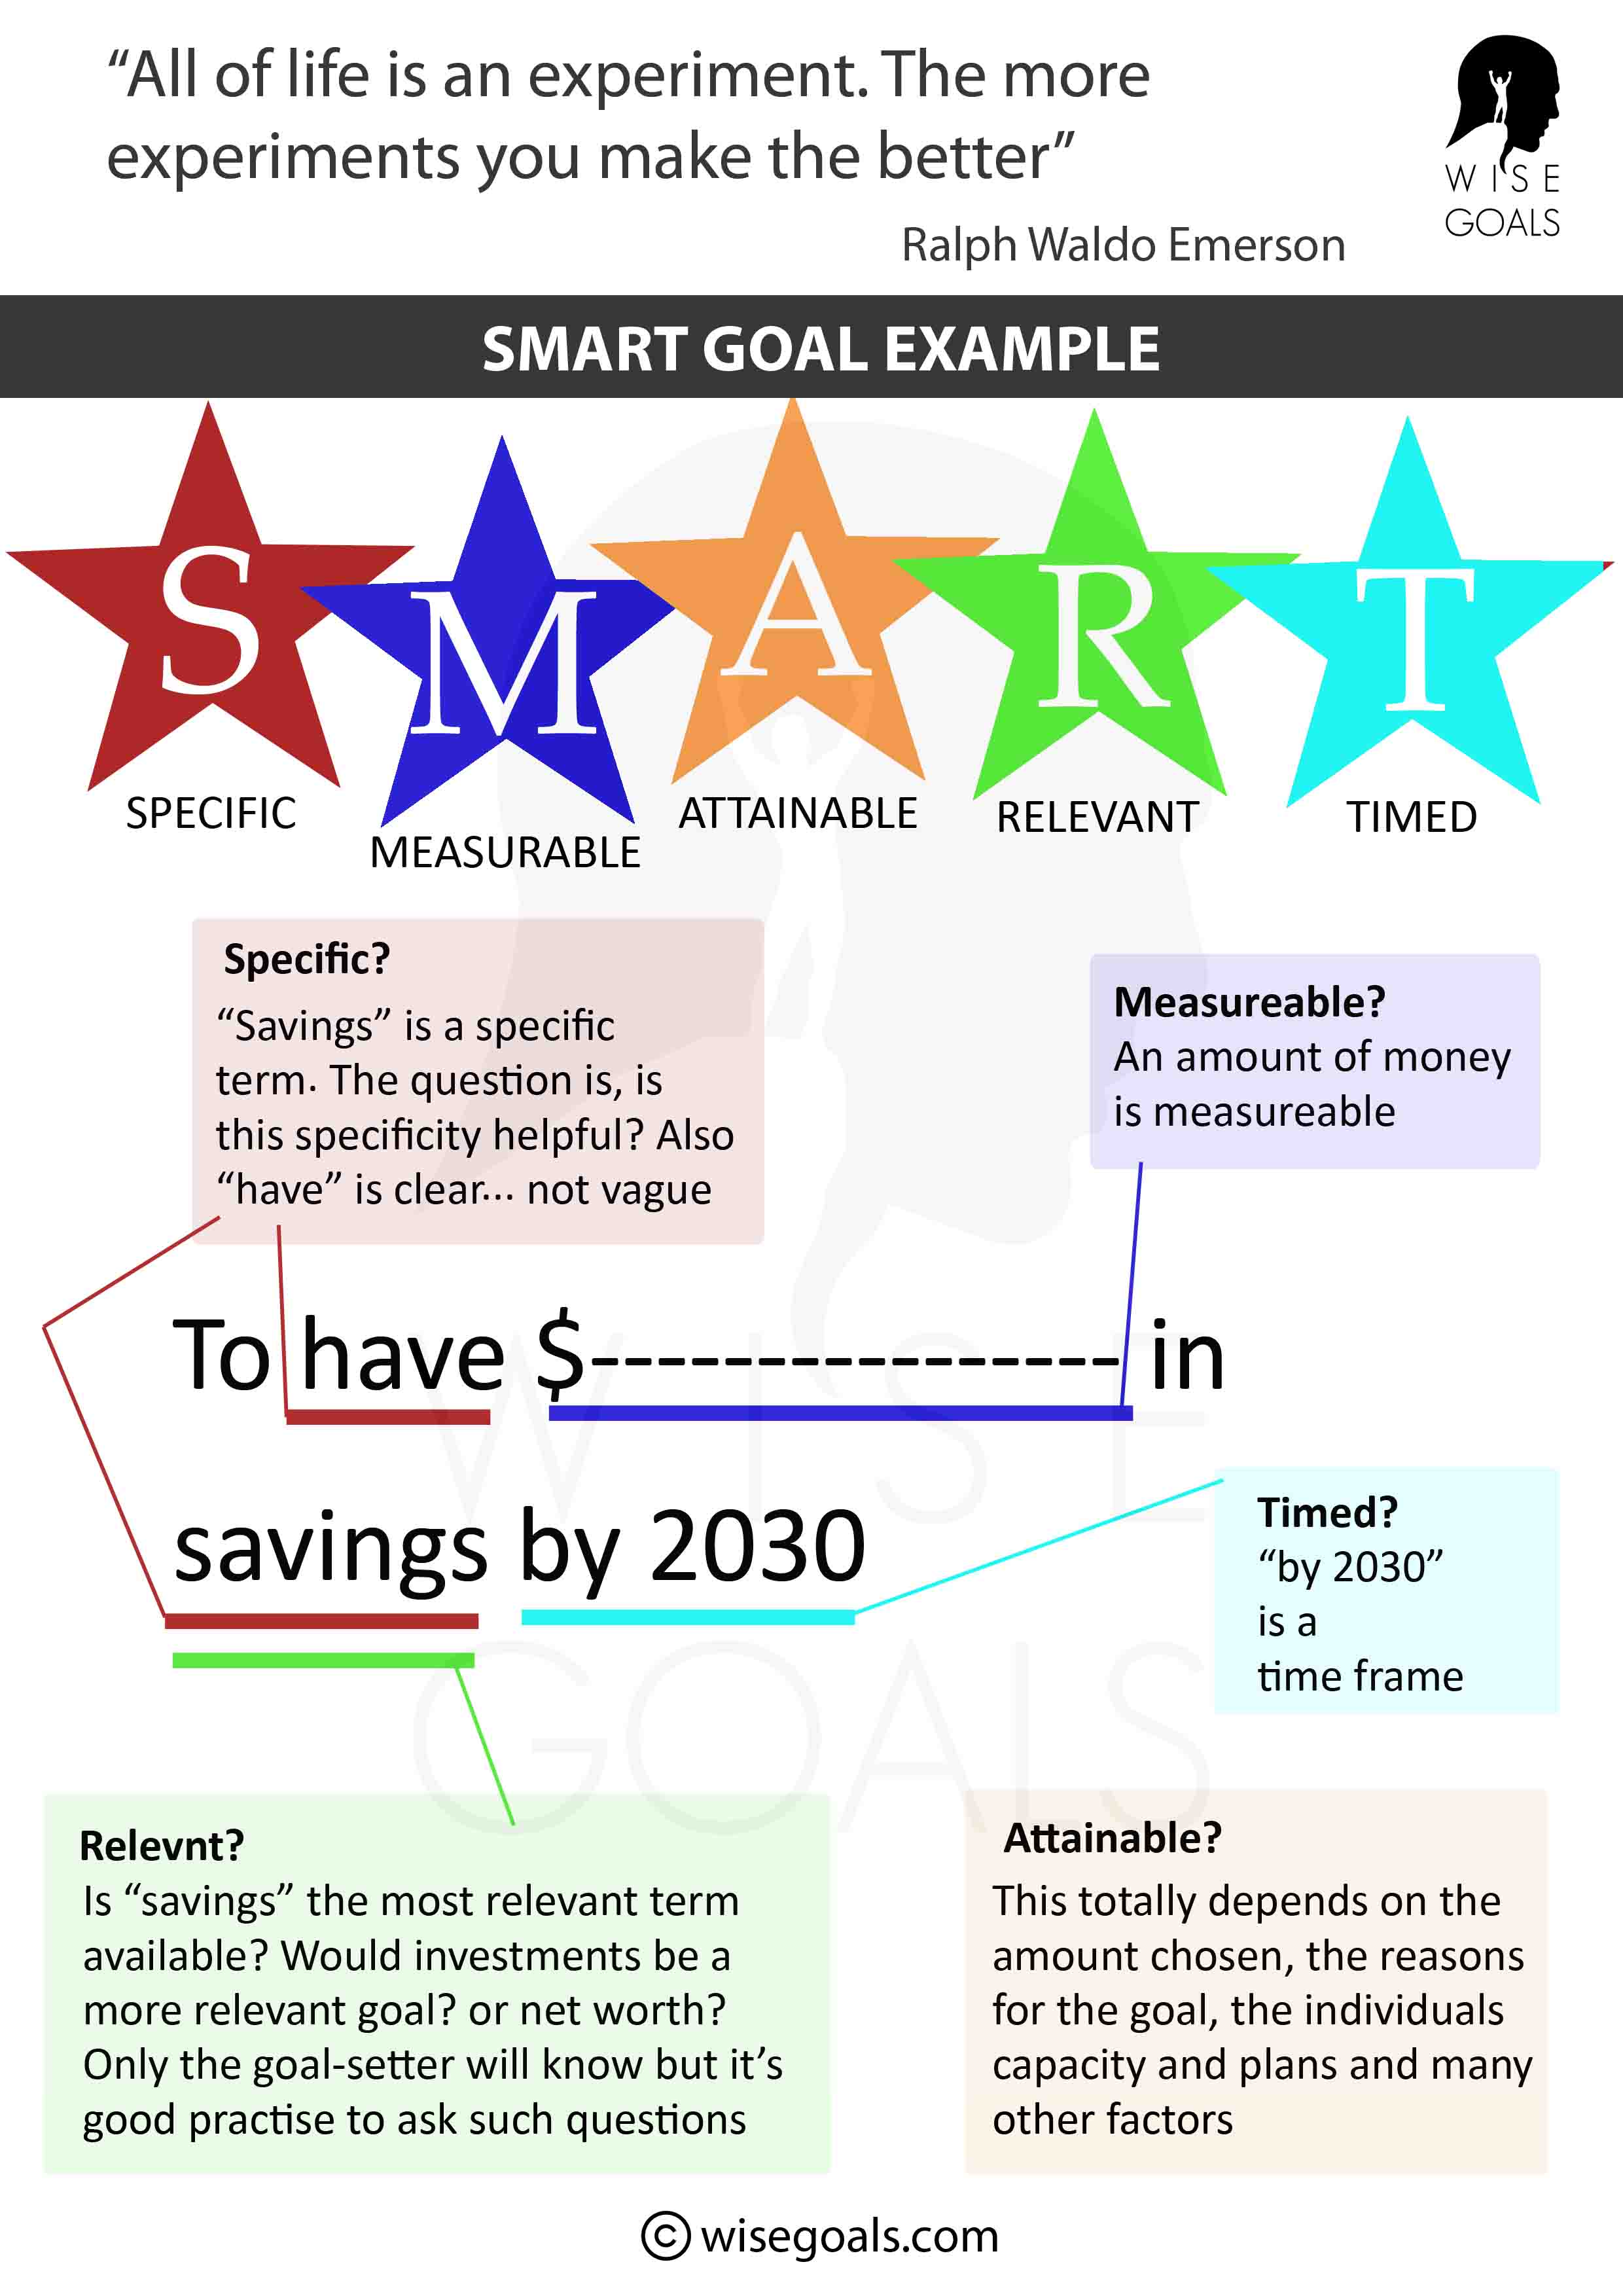 Smart goal example: Finances